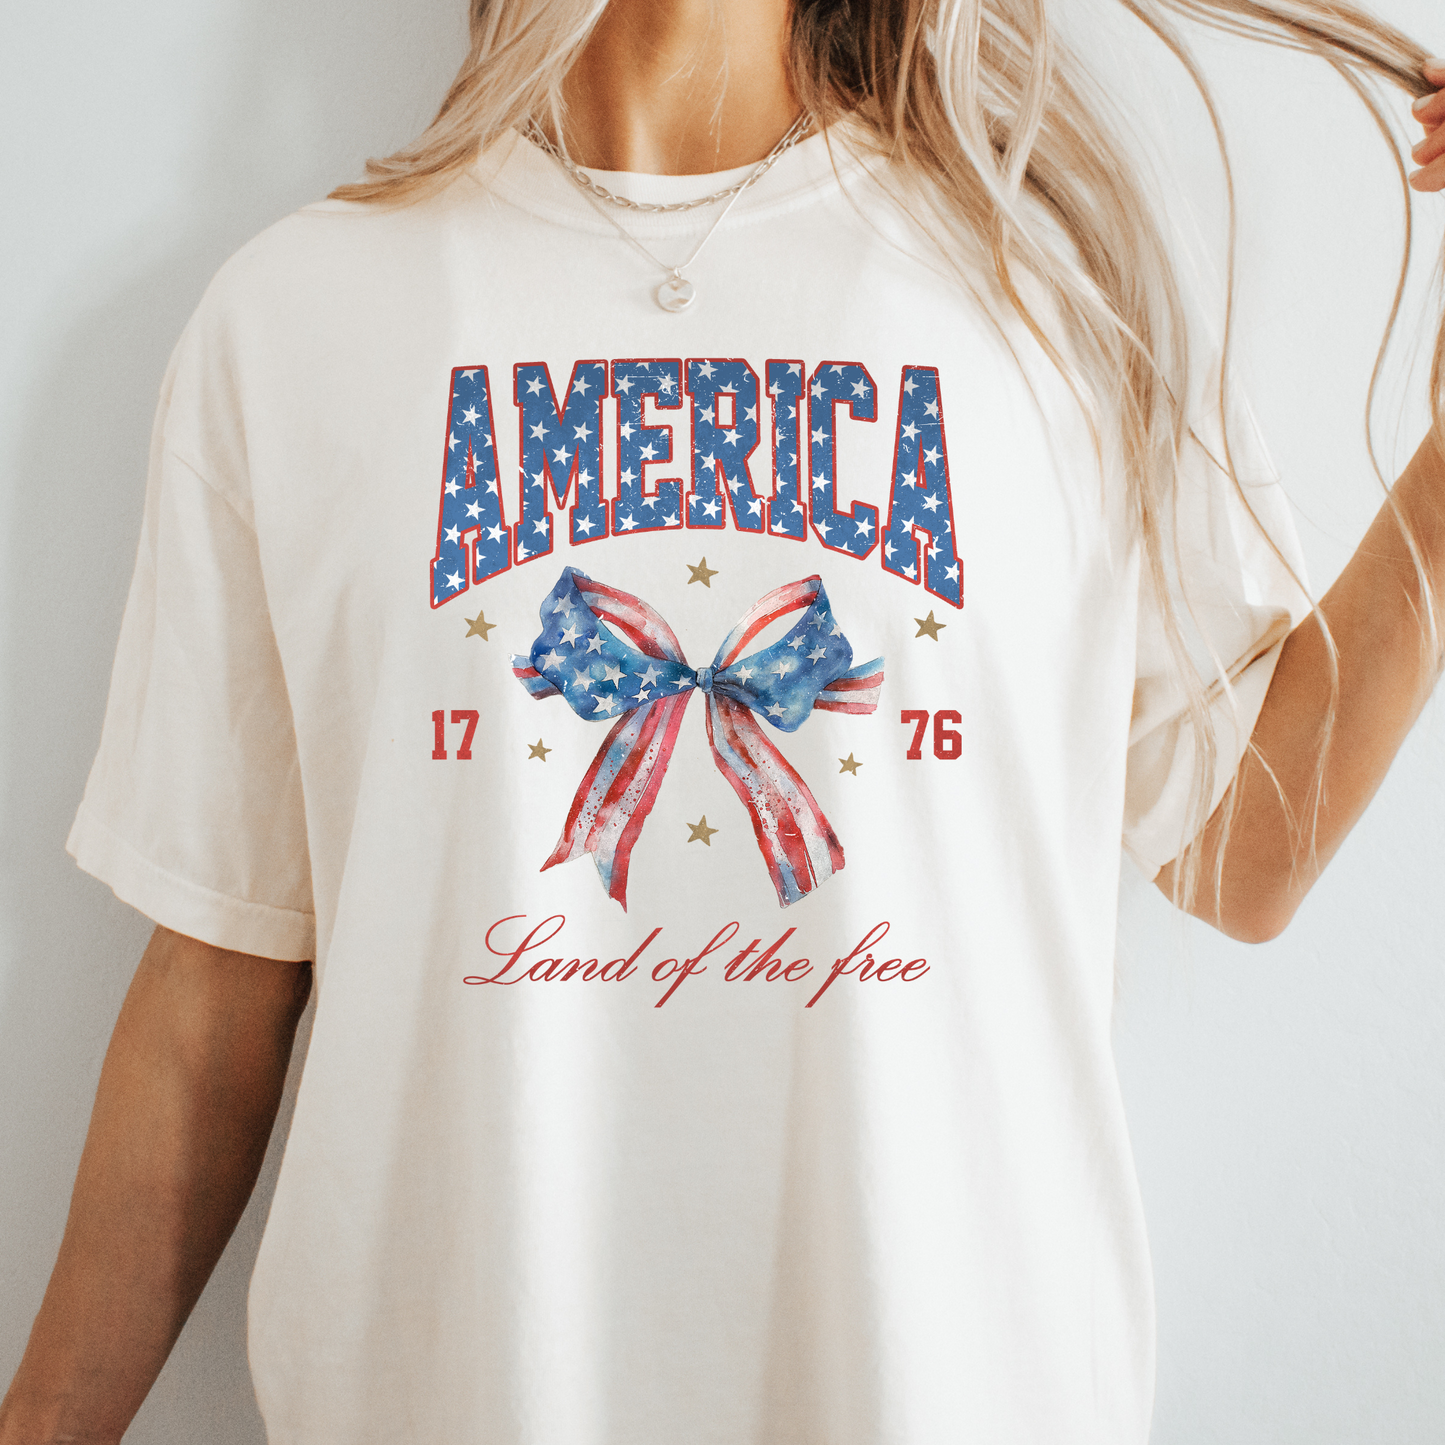 America bow tee, 1776 t-shirt, Land of the free tee